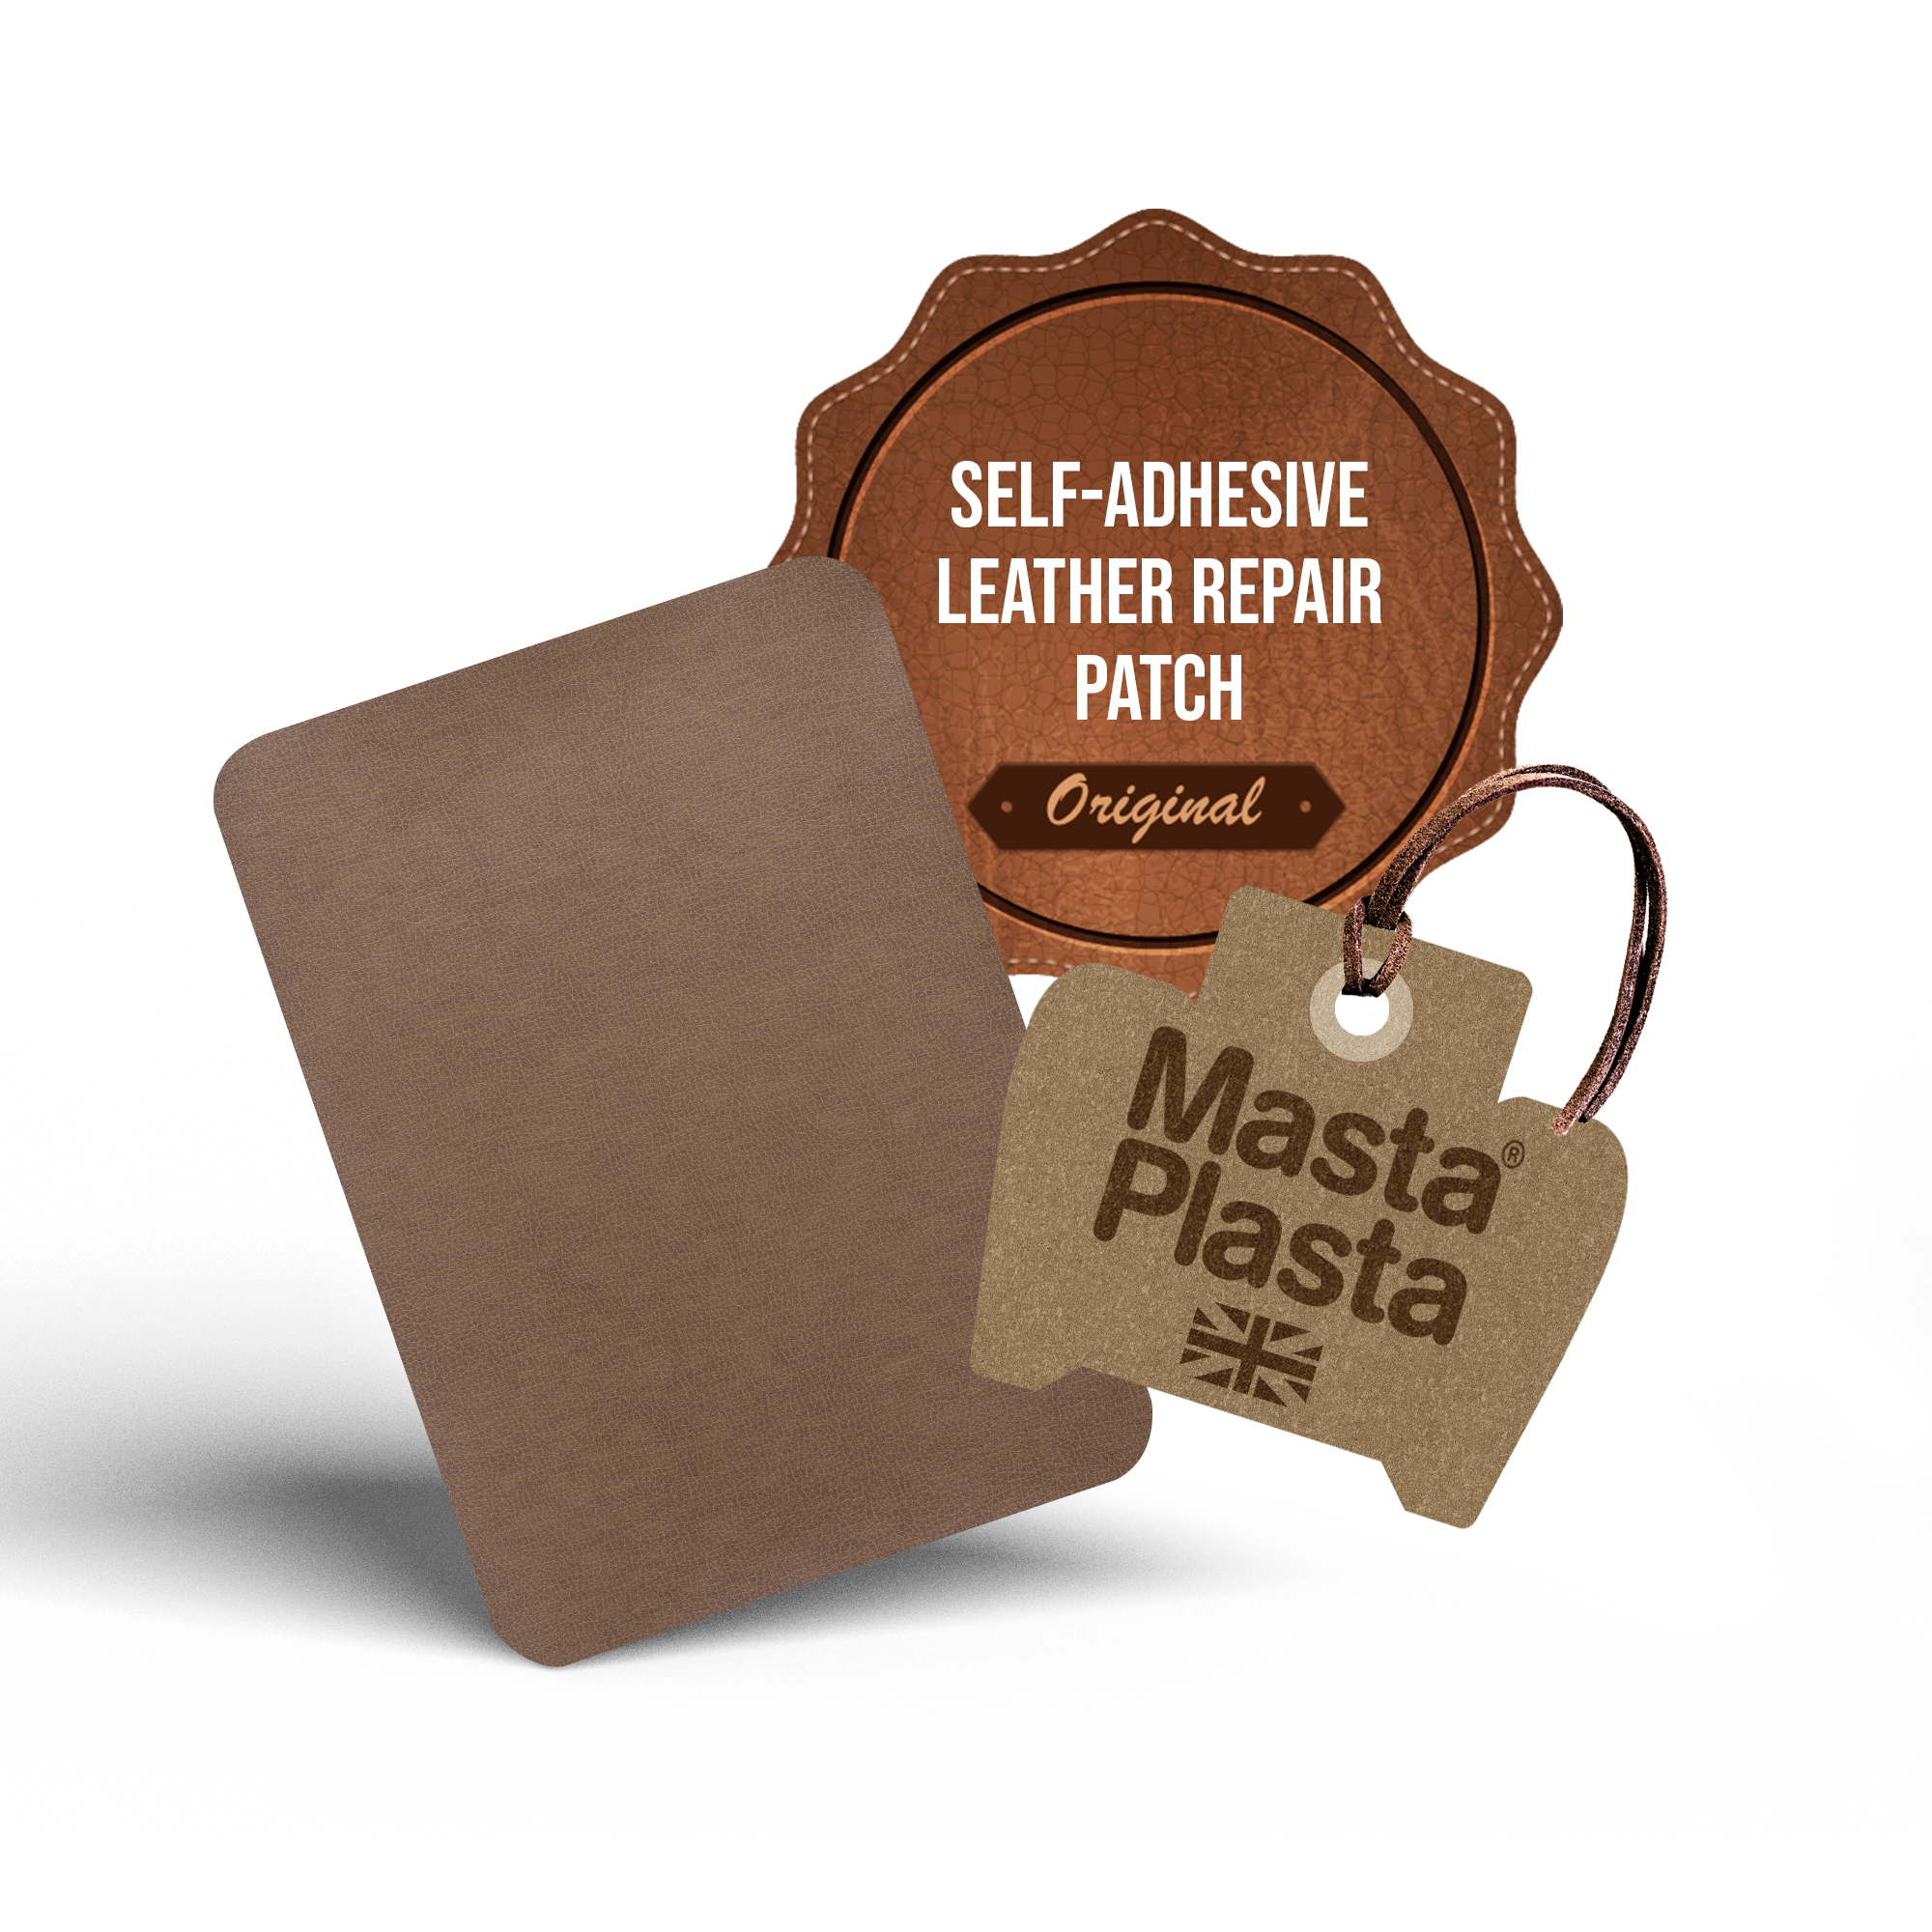 MastaPlasta Self-Adhesive Patch for Leather and Vinyl Repair, XL Plain, Tan 